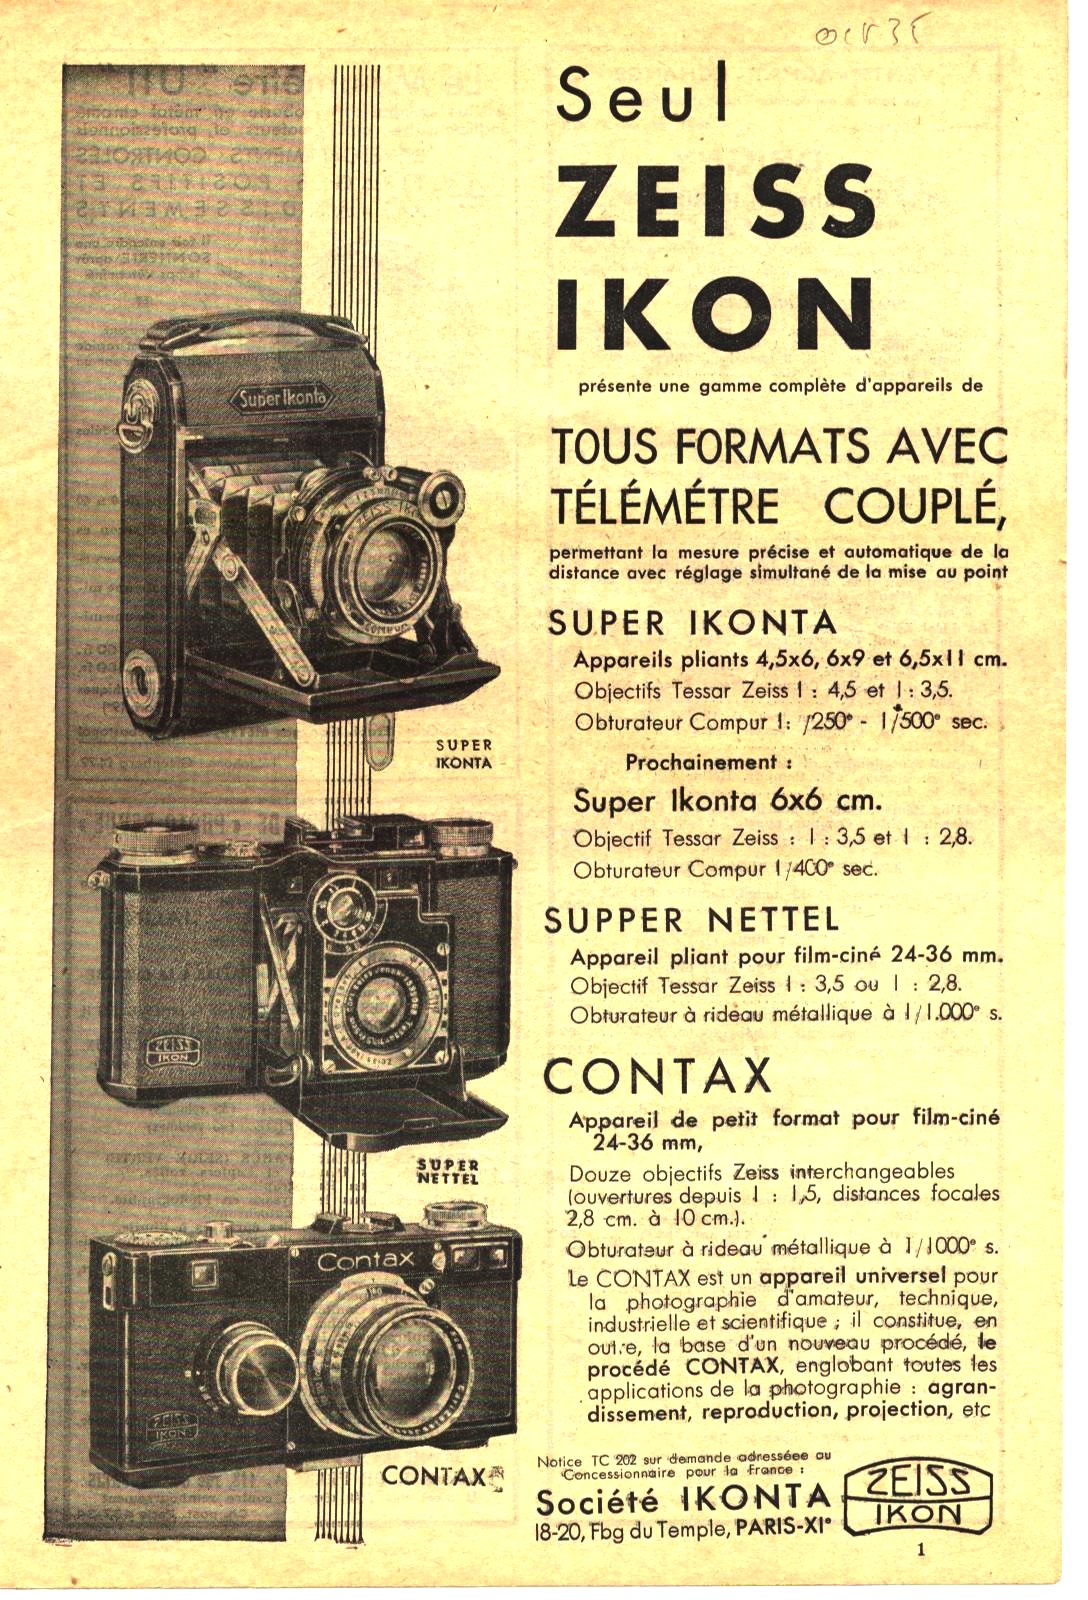 Wallpaper 1101-3 ZEISS-IKON Super Ikonta 531 modele II, collection AMI Appareils photos